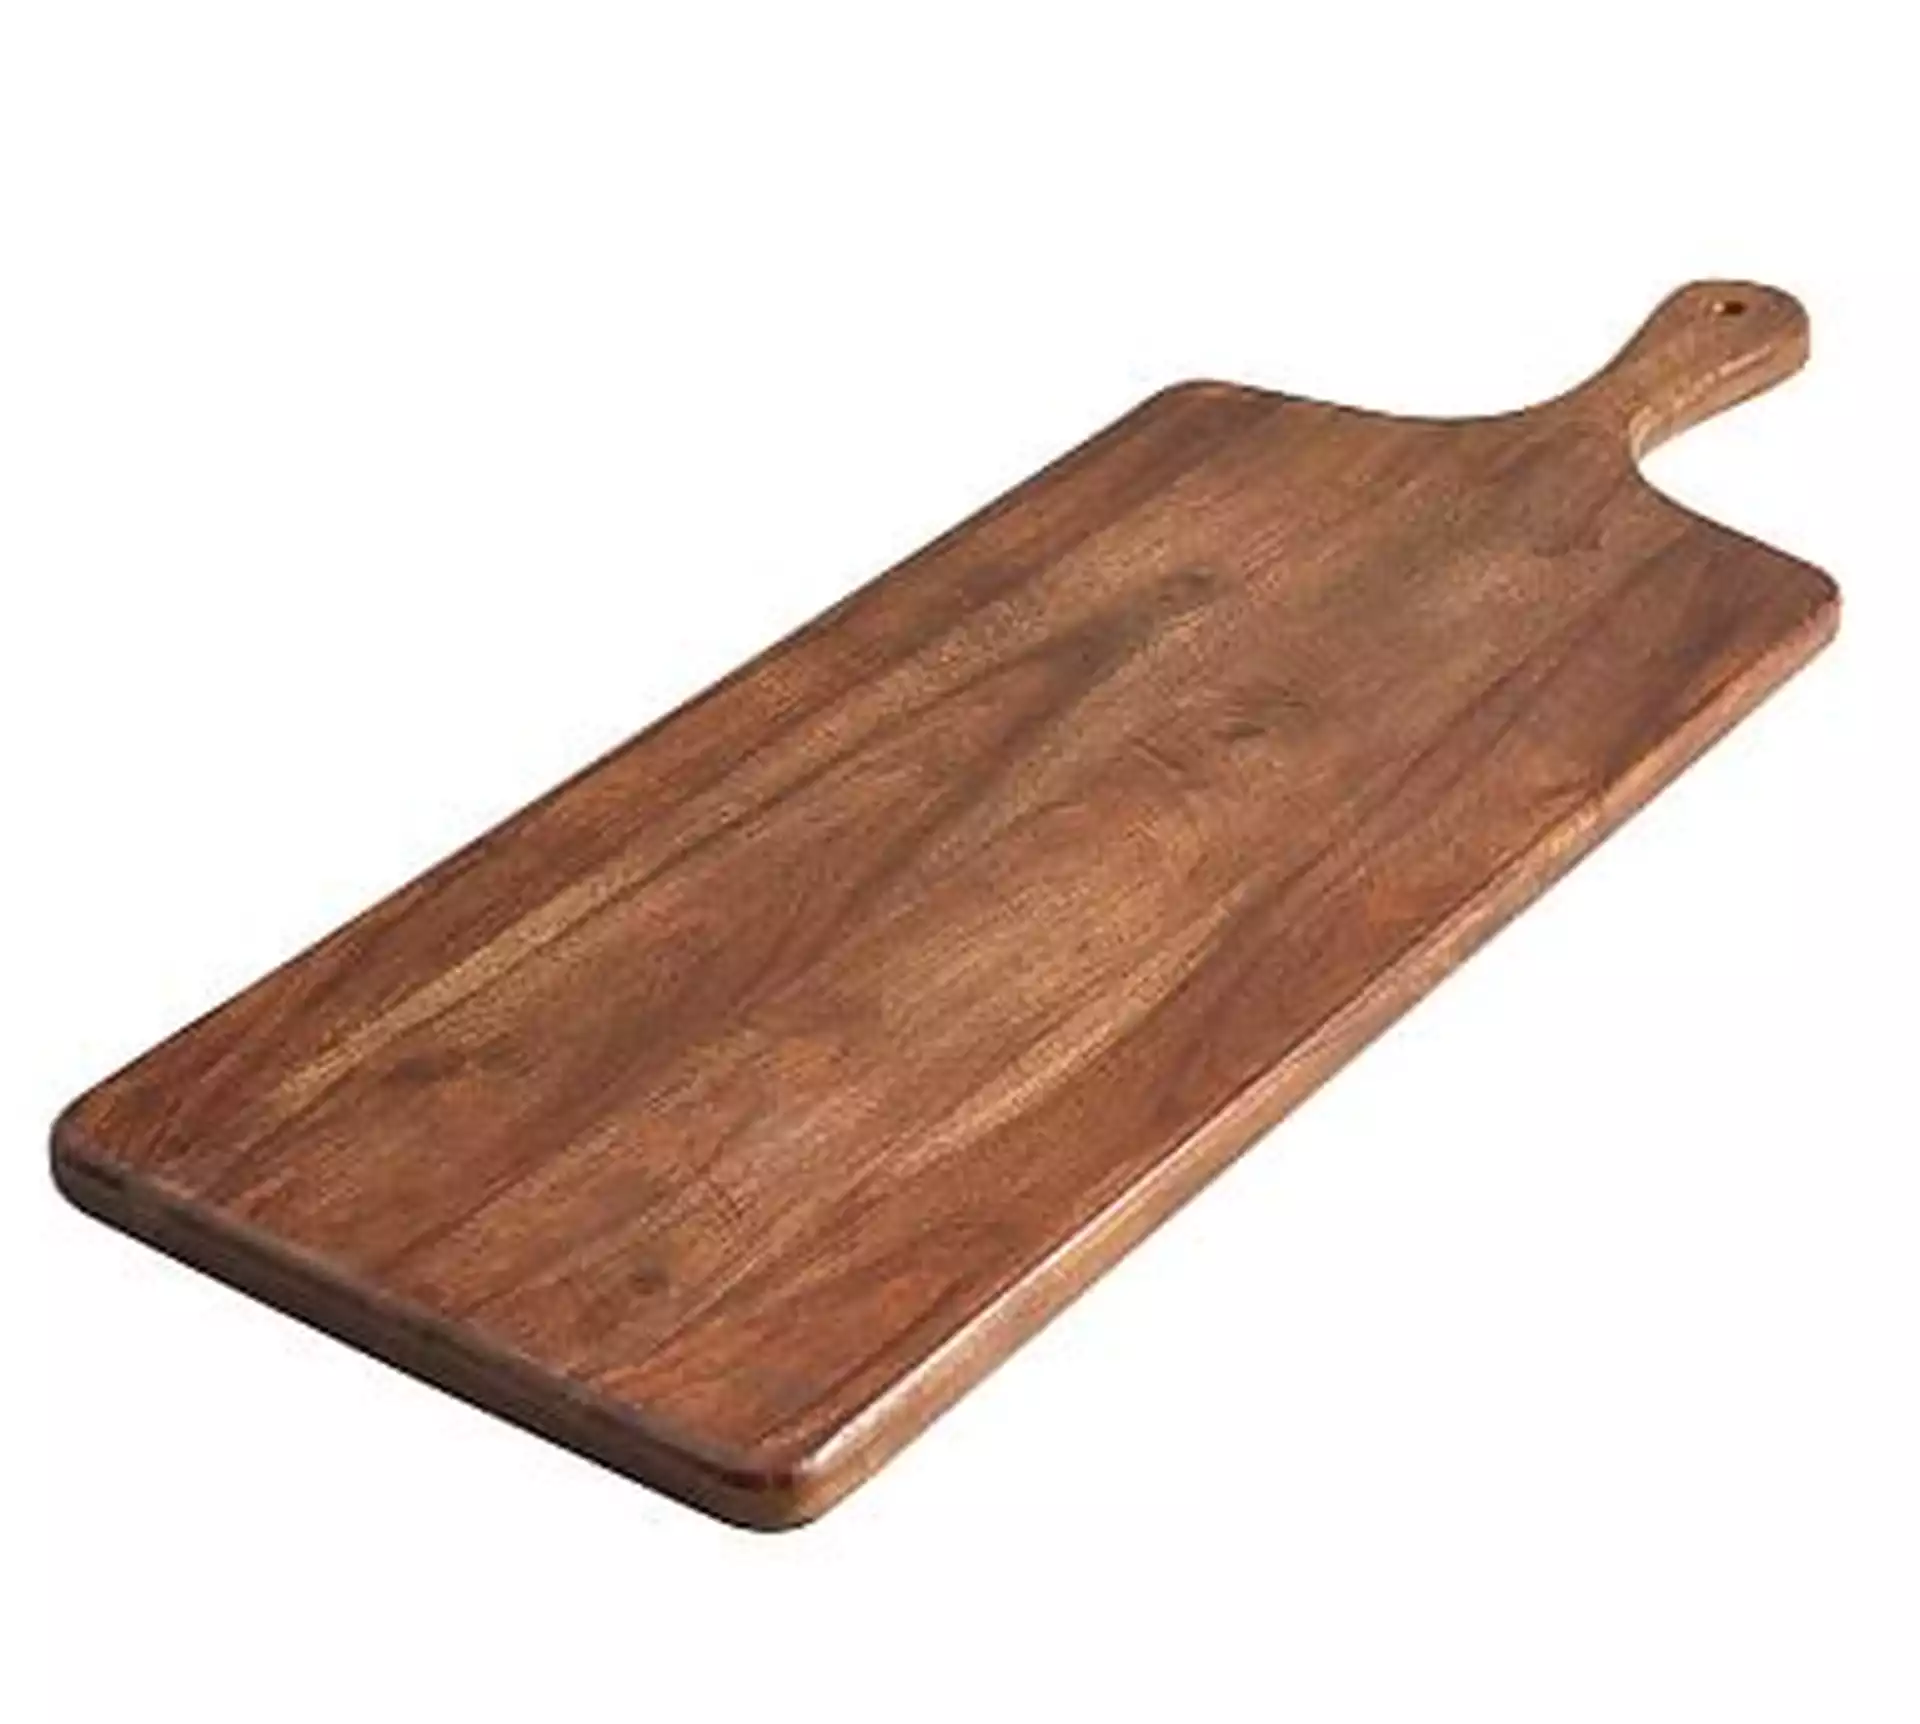 Chateau Wood Cheese Board, Large